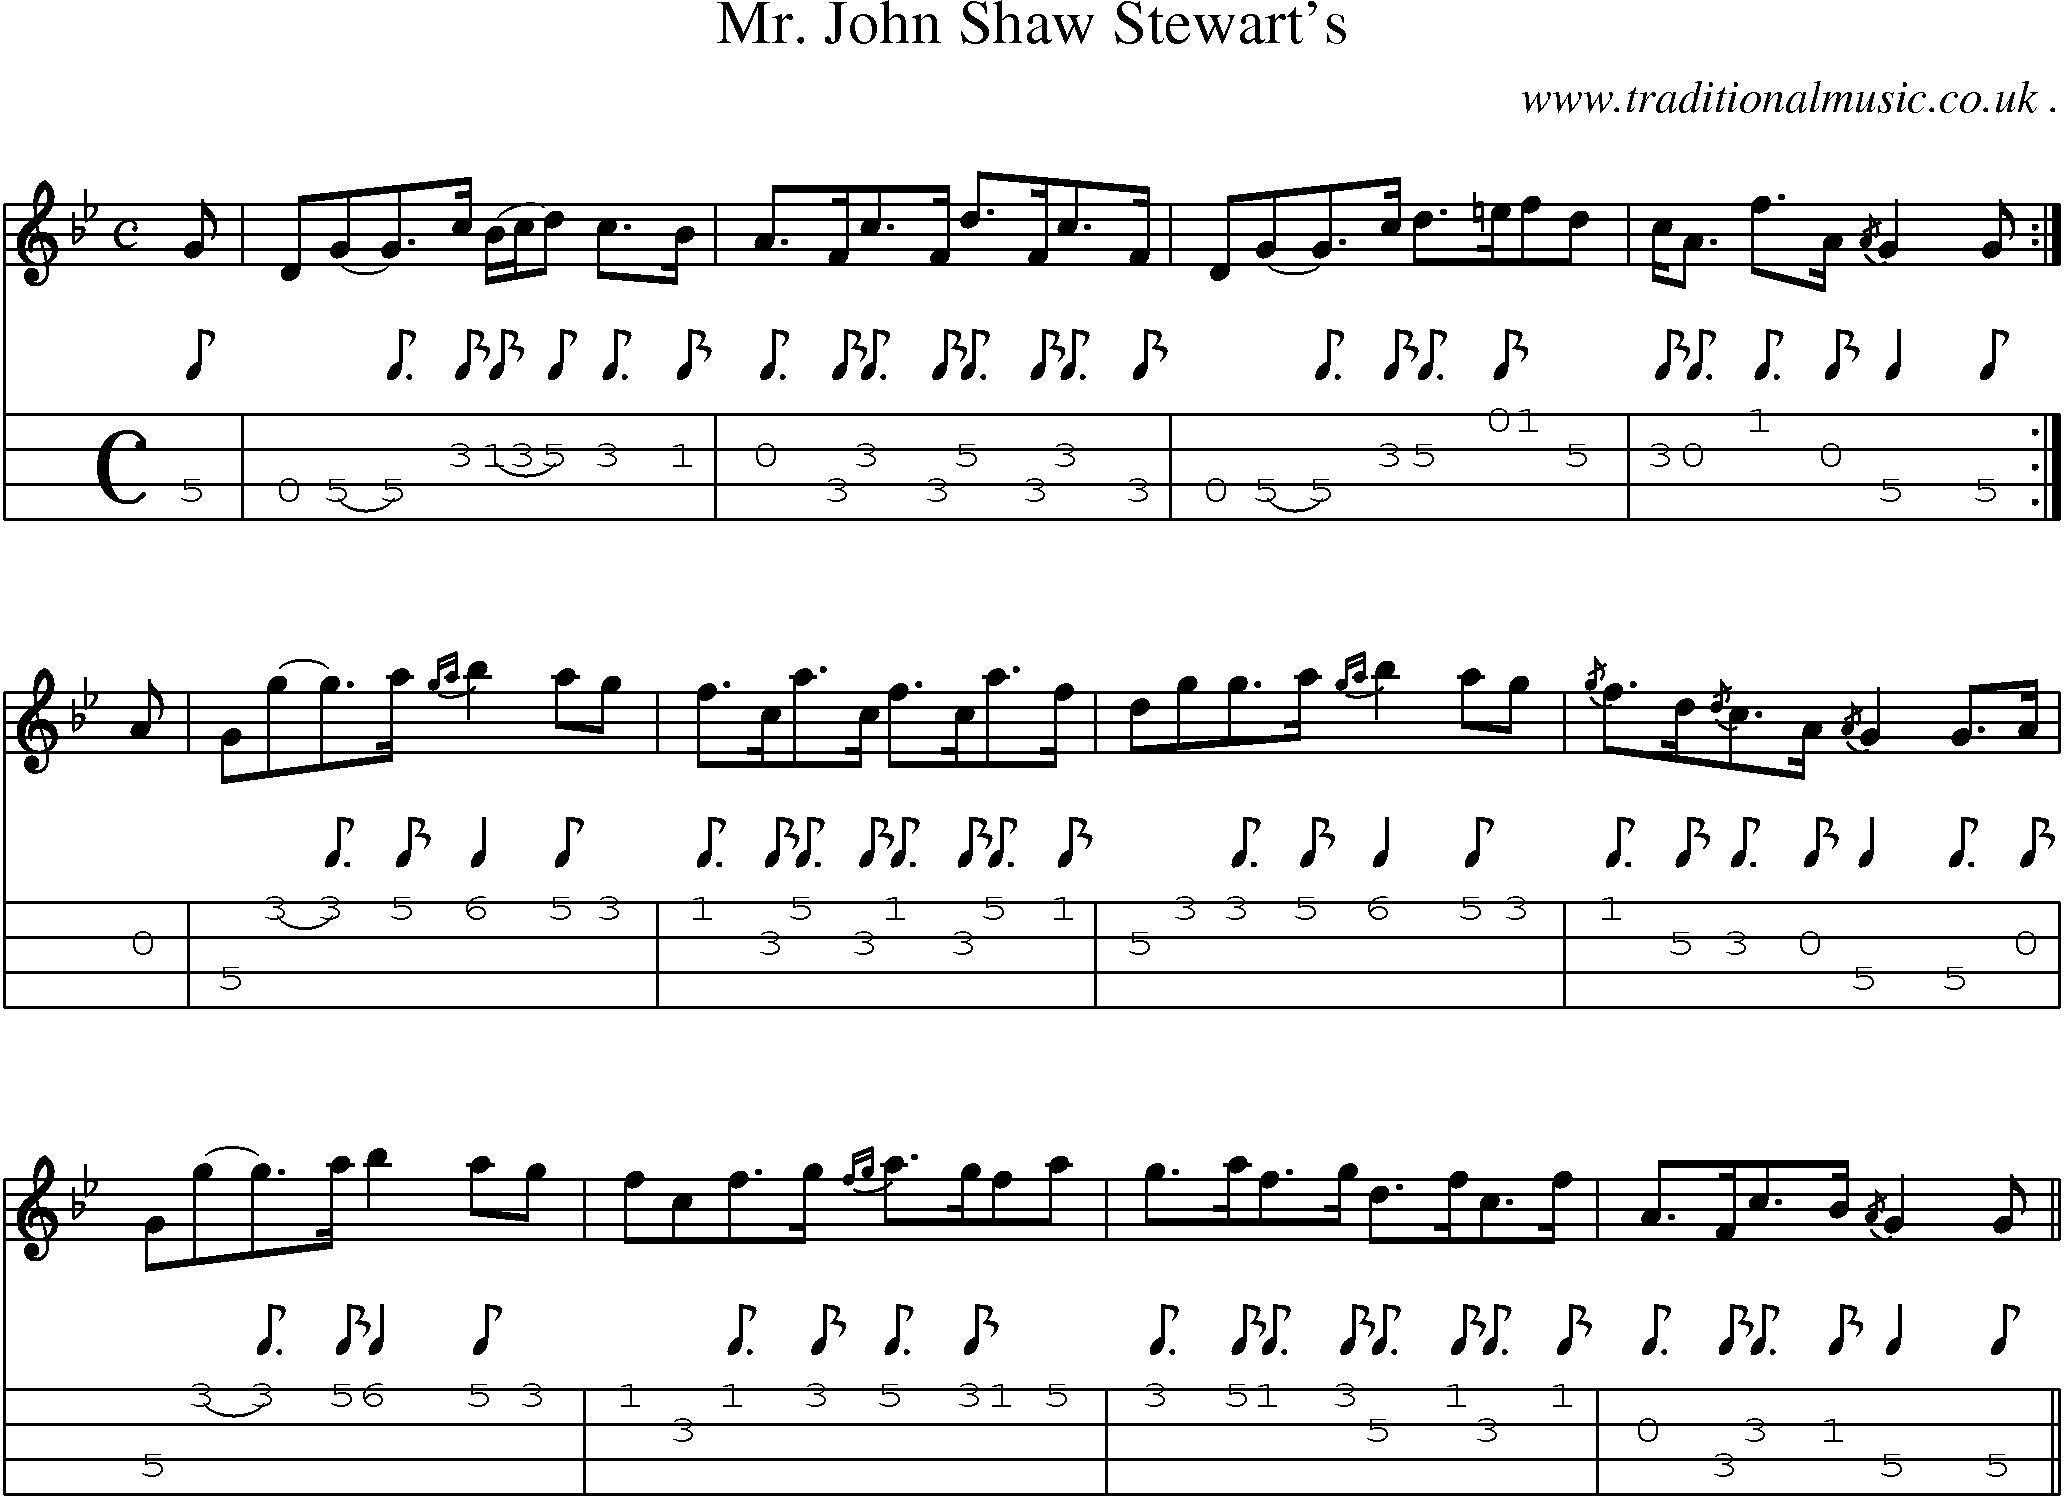 Sheet-music  score, Chords and Mandolin Tabs for Mr John Shaw Stewarts